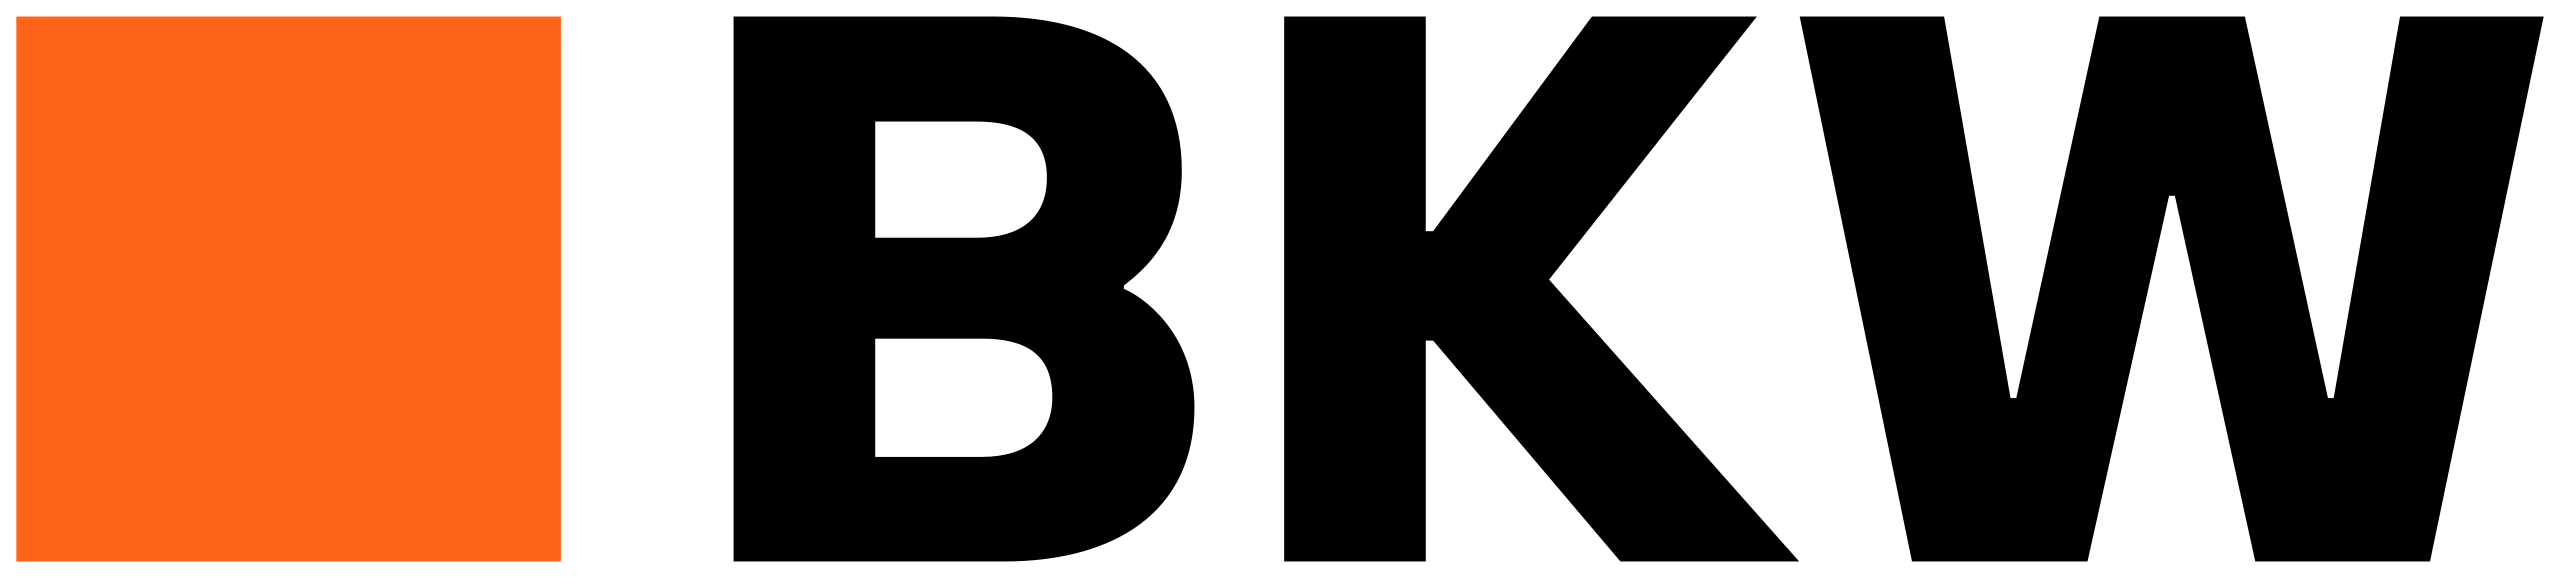 2560px-BKW_Energie_logo.svg